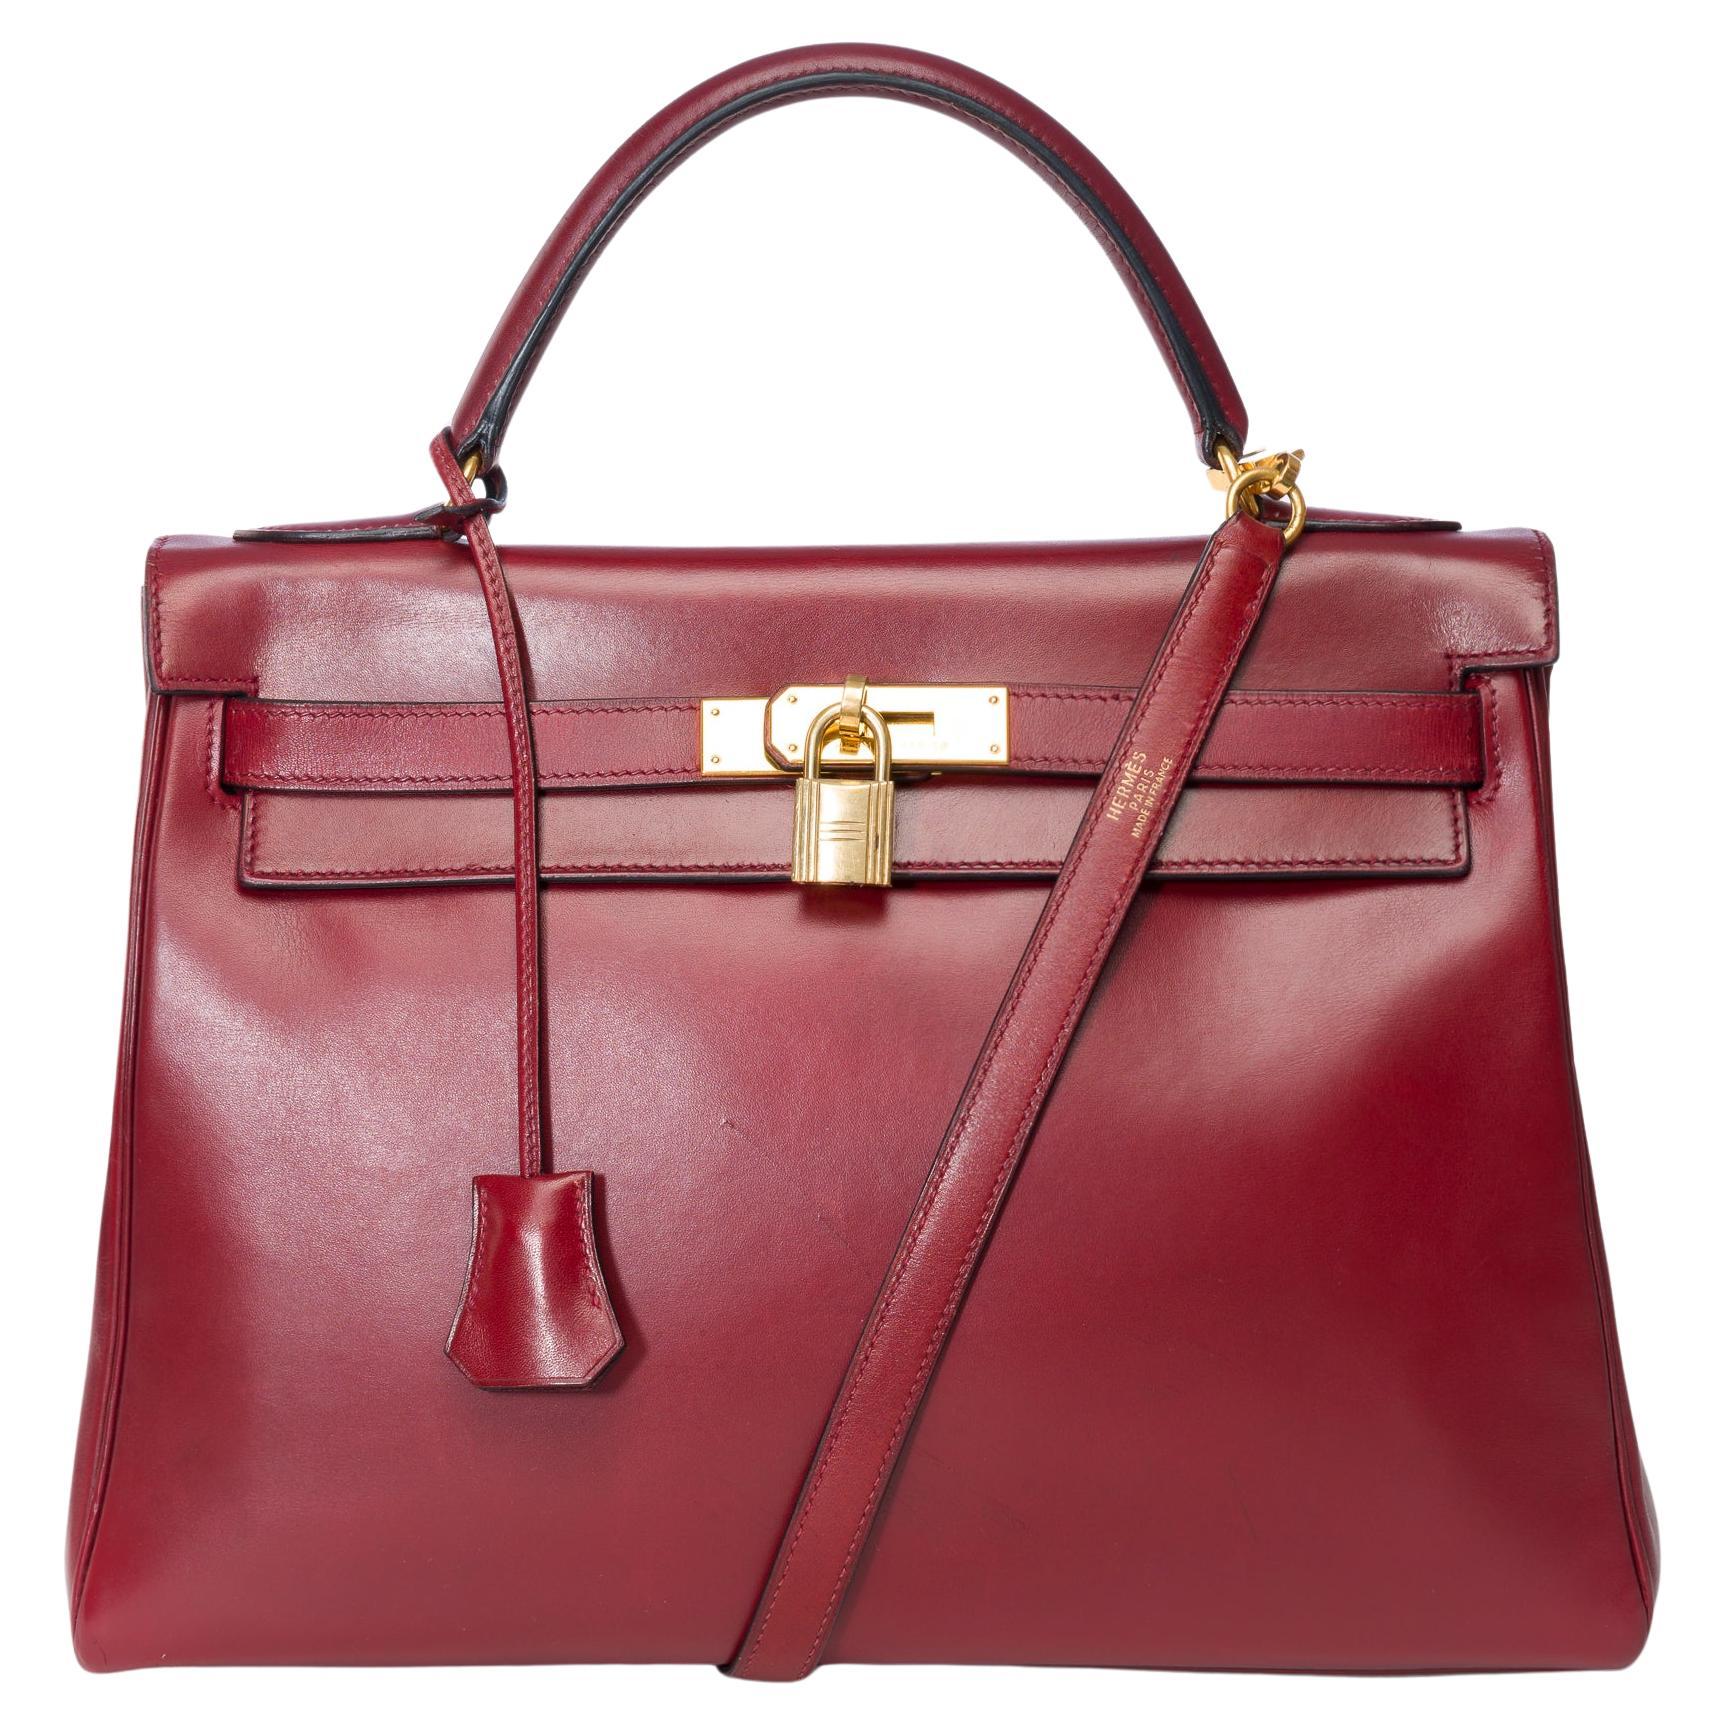 Hermès Kelly 32 retourne handbag strap in Burgundy box calfskin leather, GHW